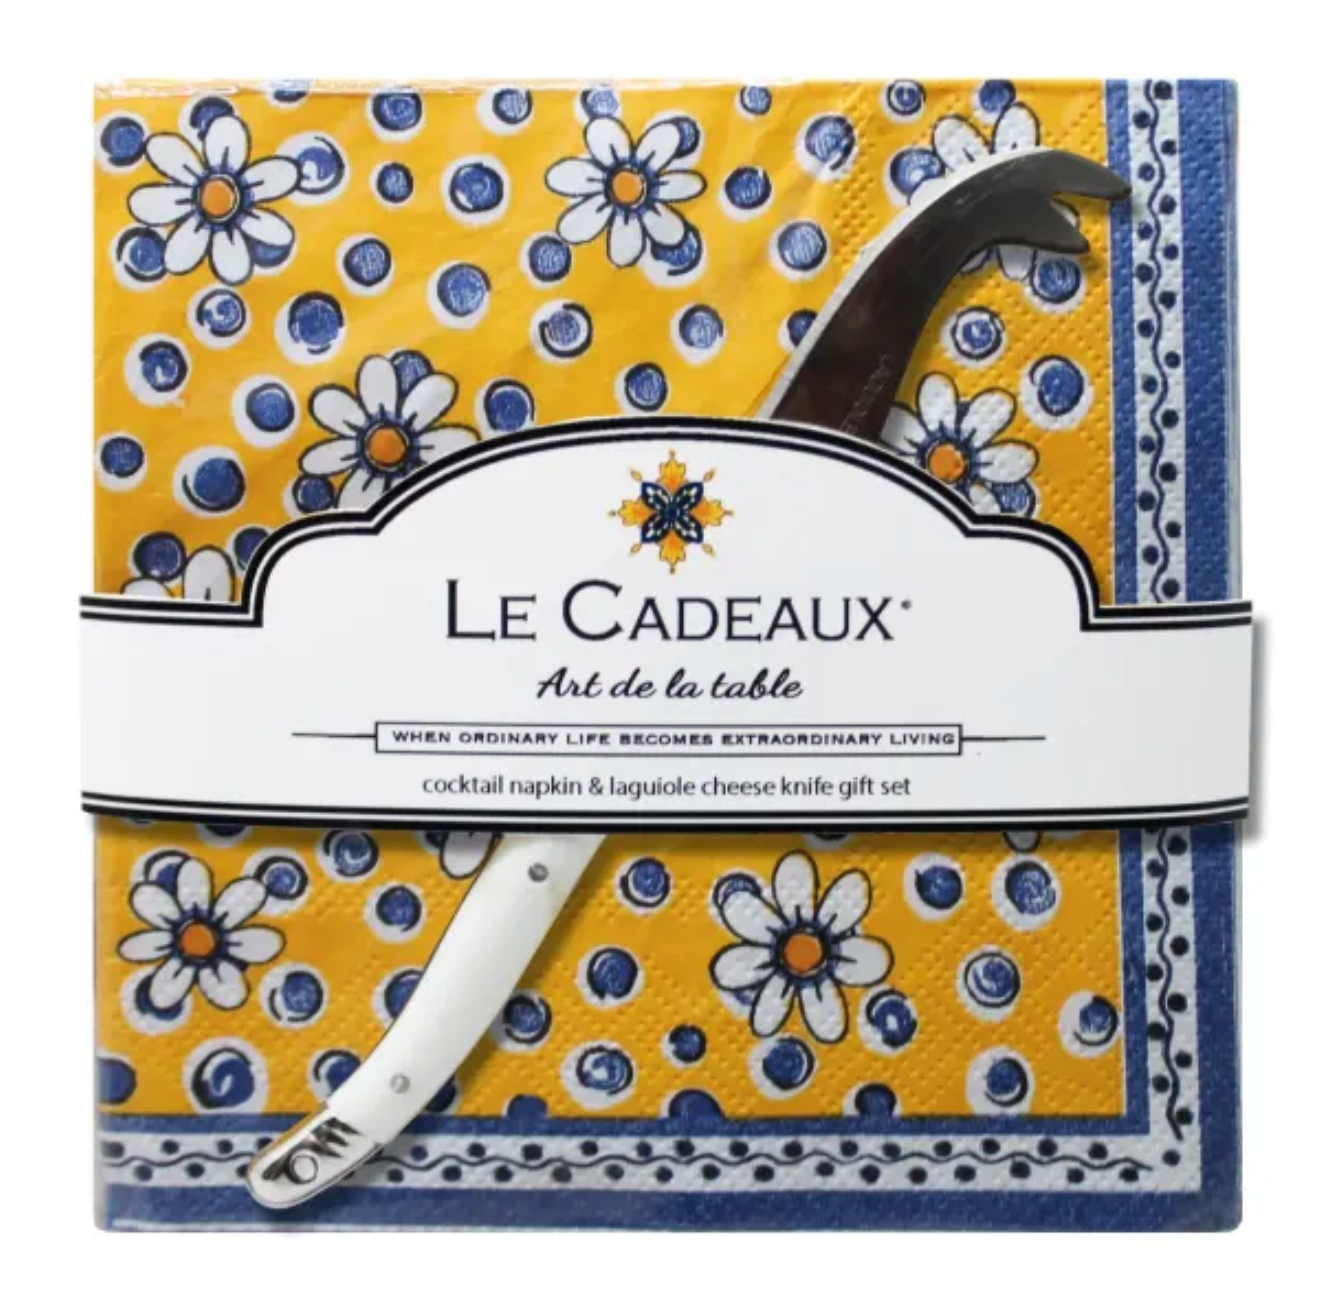 Le Cadeaux Benidorm Gift Set - 20 Cocktail Napkins With Laguiole Mini Cheese Knife